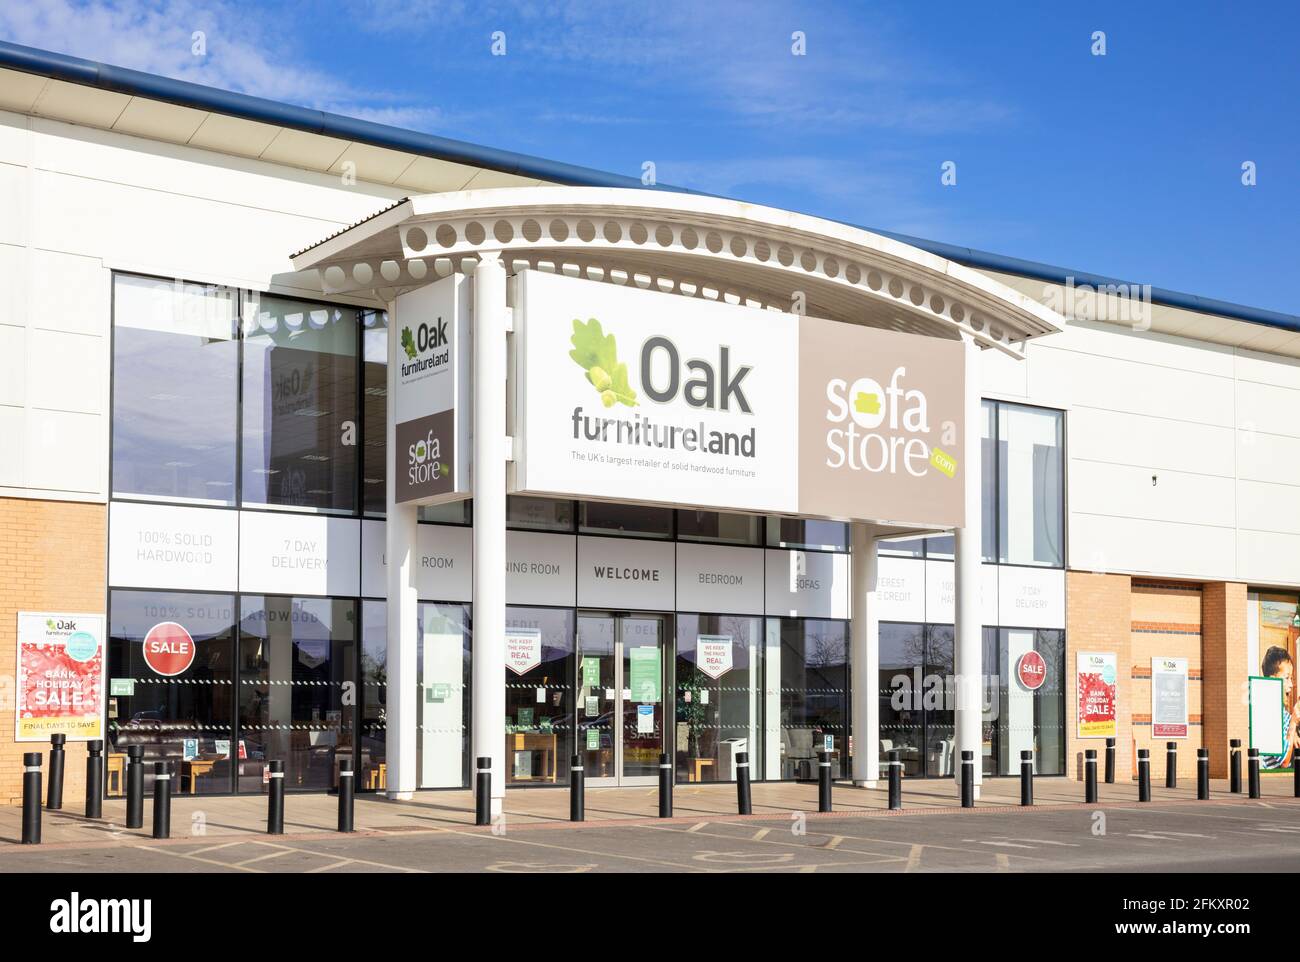 Oak Furnitueland Store et sofa Store Victoria Retail Park Netherfield Nottingham East Midlands Angleterre GB Royaume-Uni Europe Banque D'Images